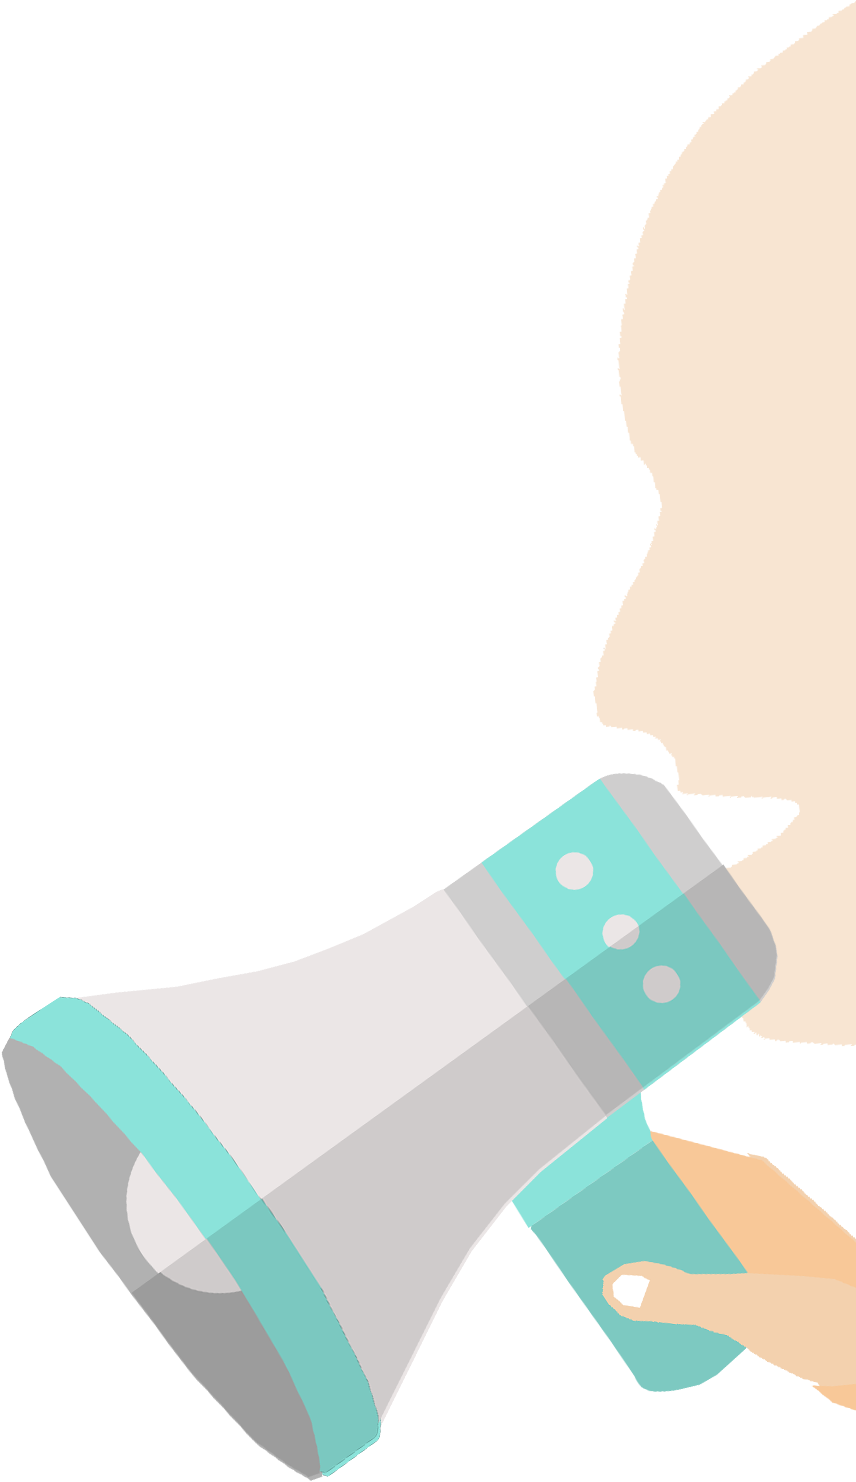 A Cartoon Of A Person Holding A Megaphone